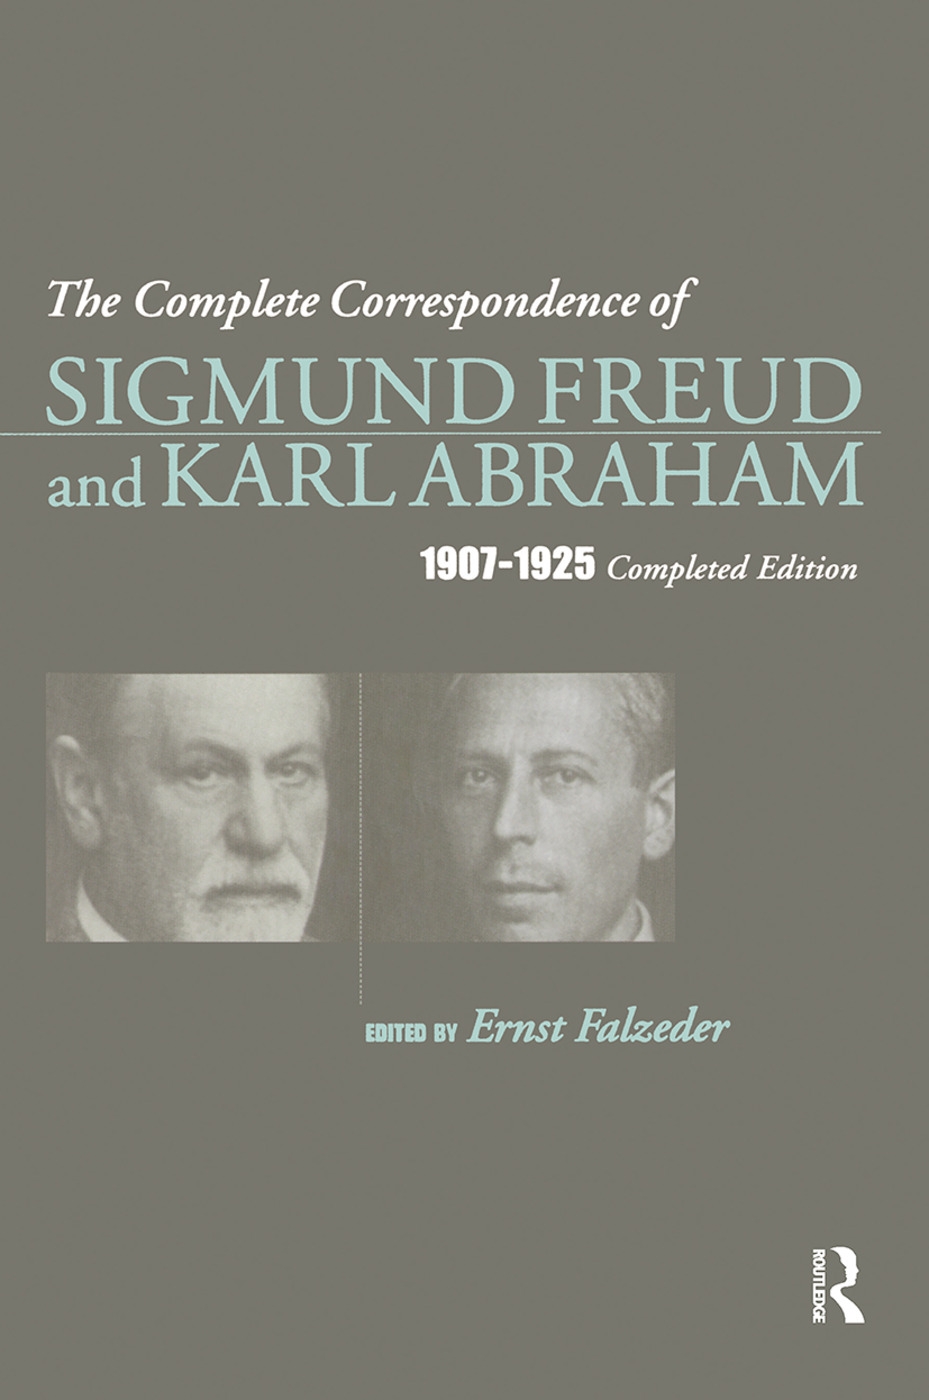 Complete Correspondence of Sigmund Freud and Karl Abraham, 1907-1925